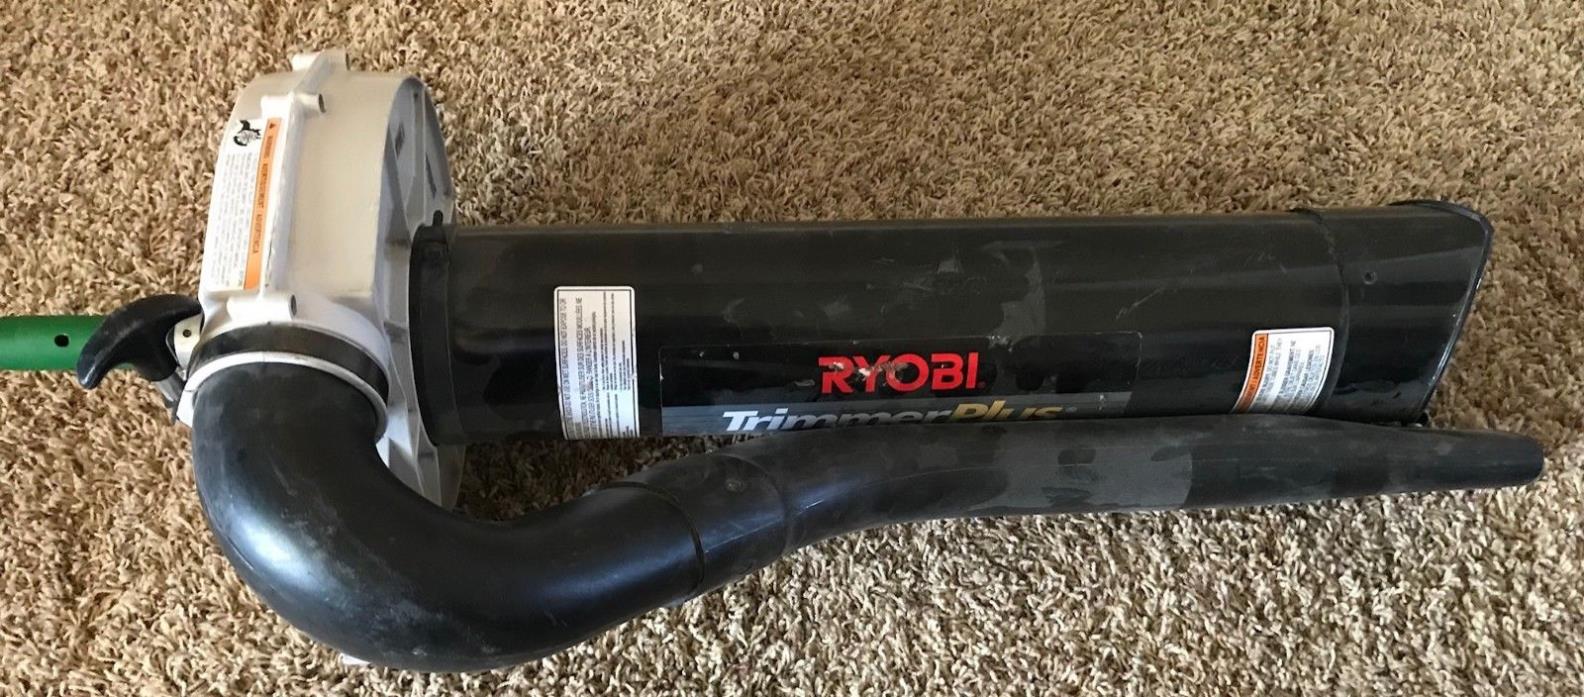 Ryobi Trimmer Plus 120 MPH Blower/Vacuum BV720r Full Attachment No bag